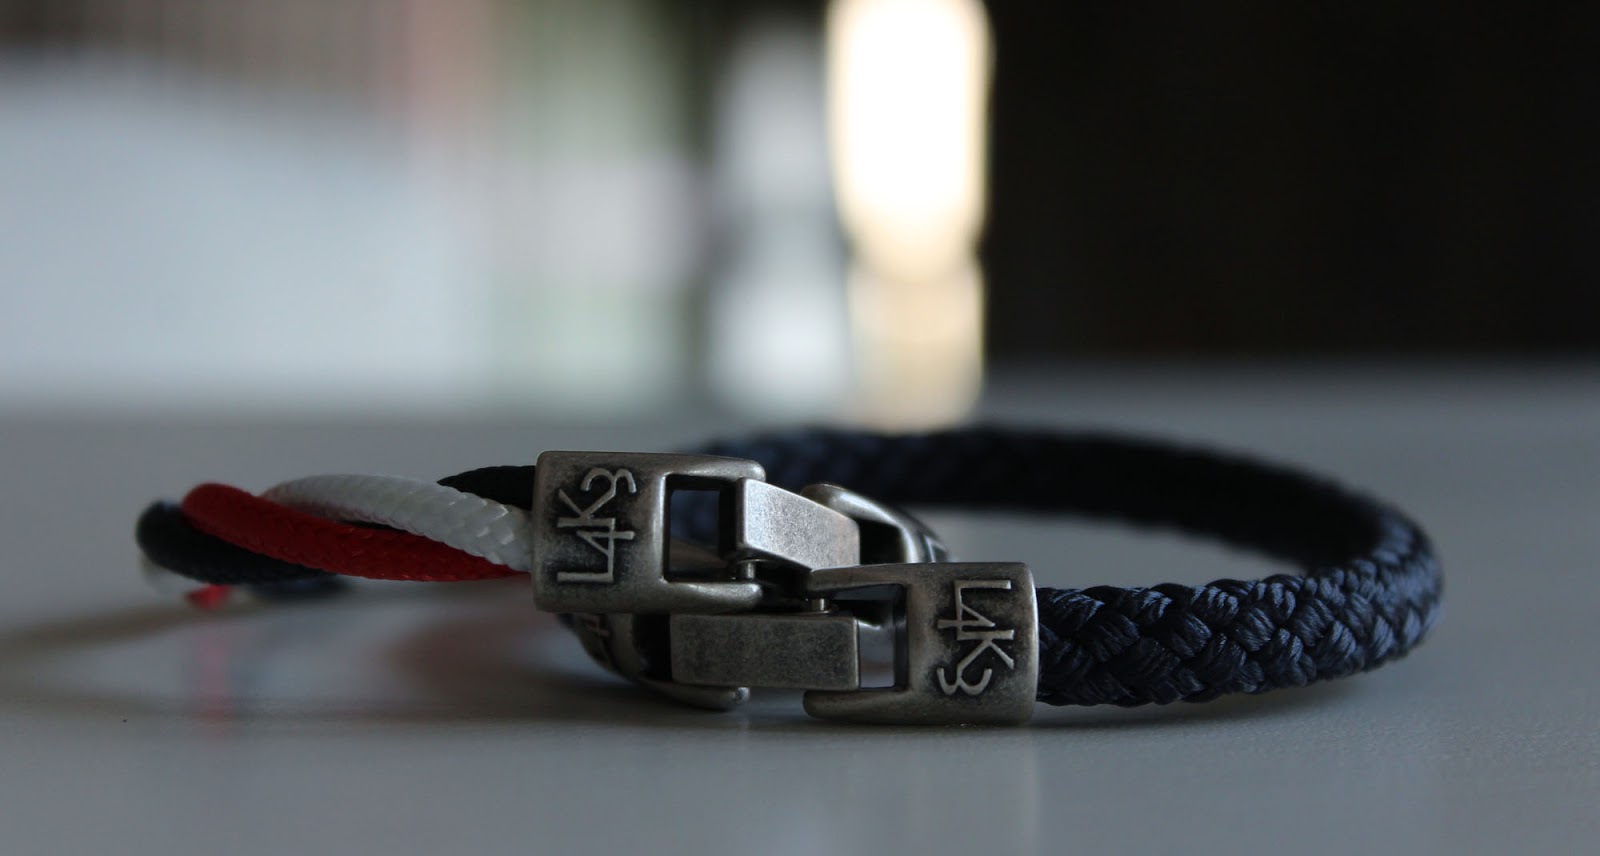 Eniwhere Fashion - L4K3 bracelet and Off Shoulder Zara